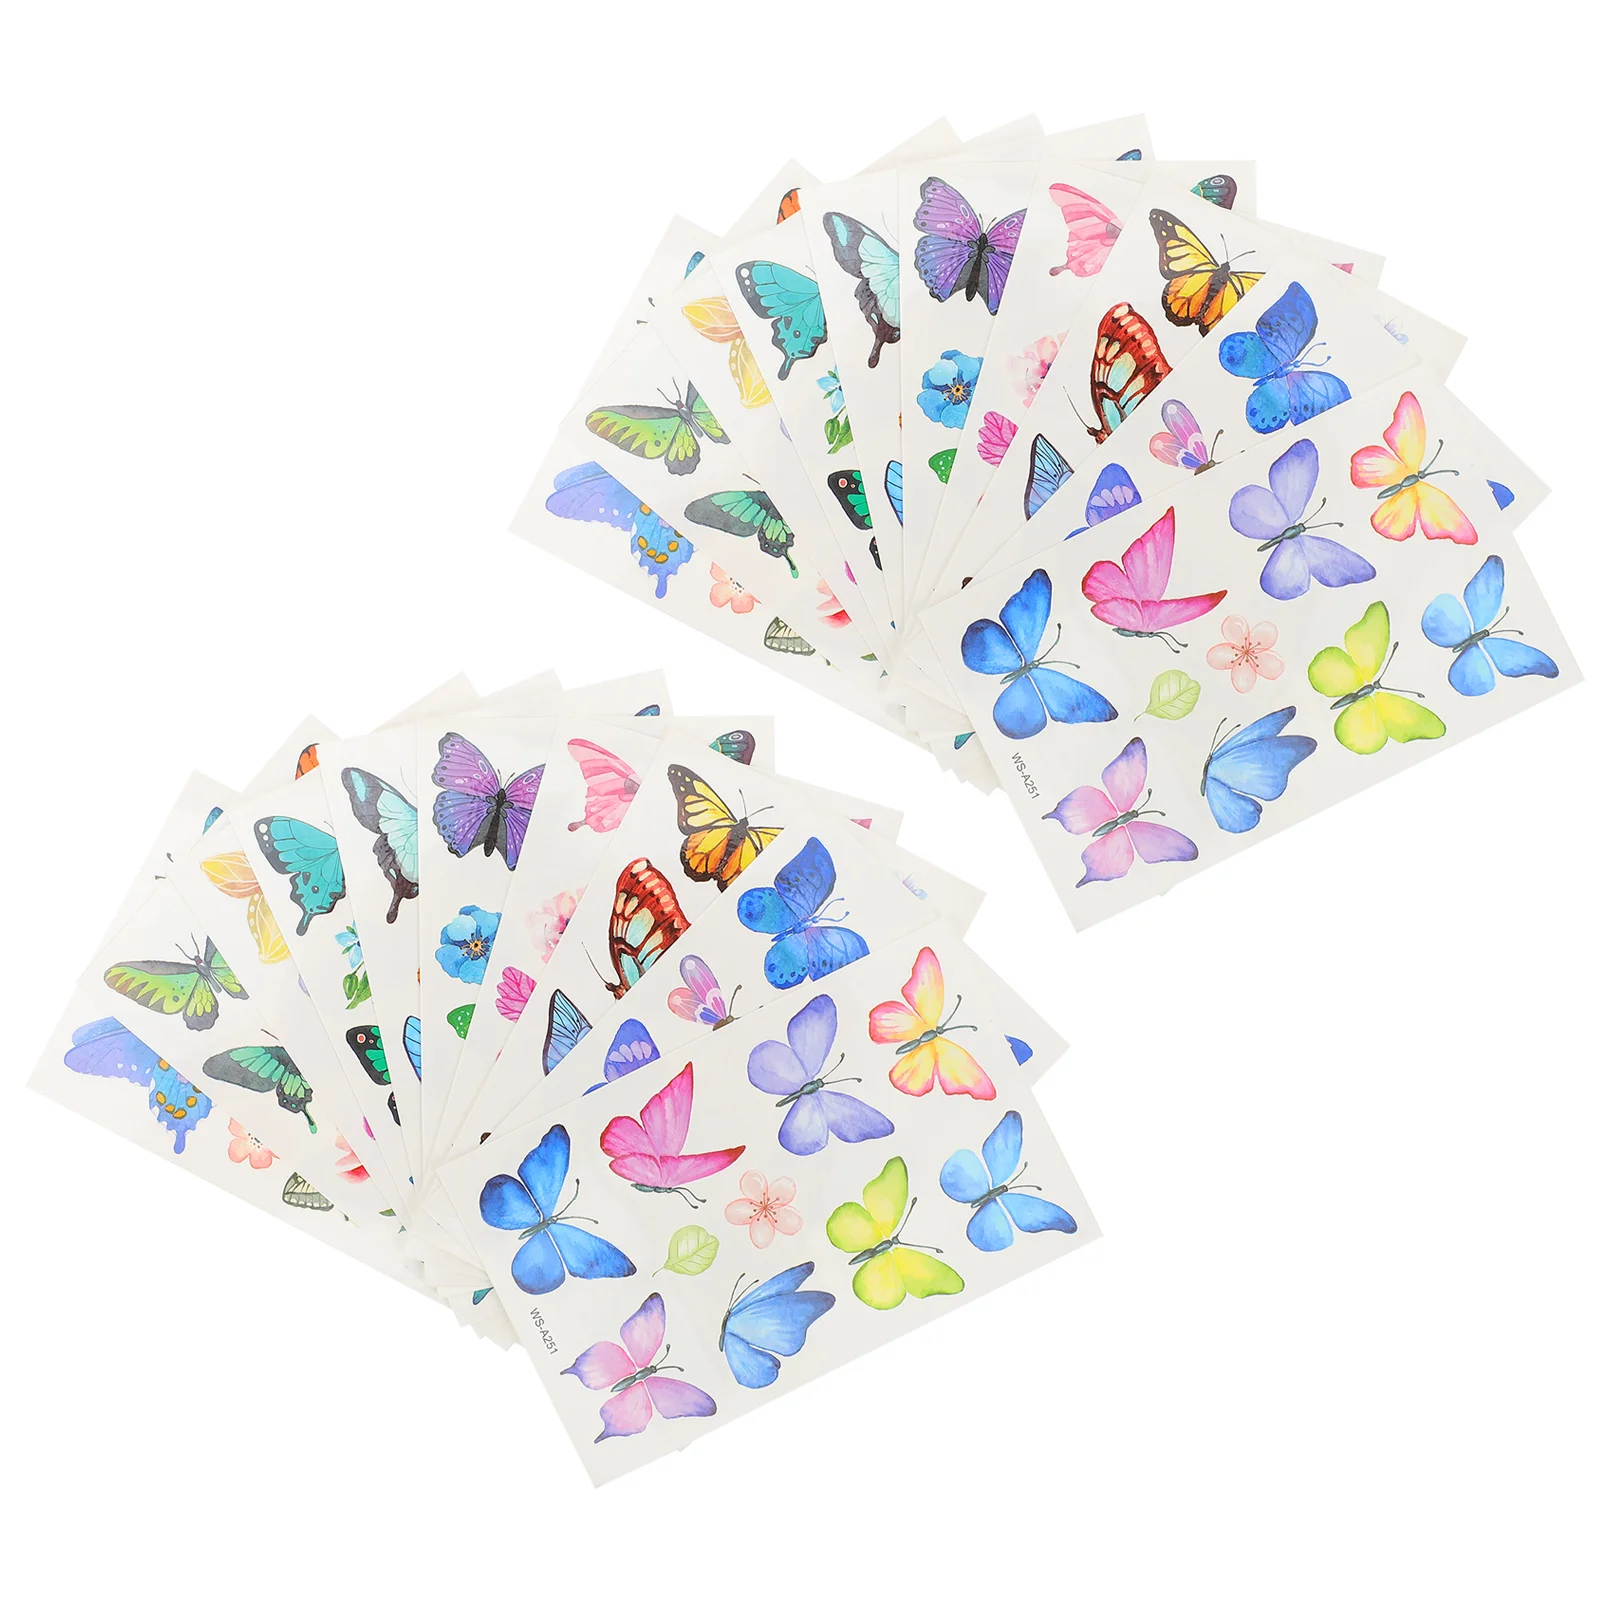 

20 Sheets Girls Stickers Butterfly Butterflies Temporary Tattoos Transfer Decals Cartoon Women Colorful Kids Child